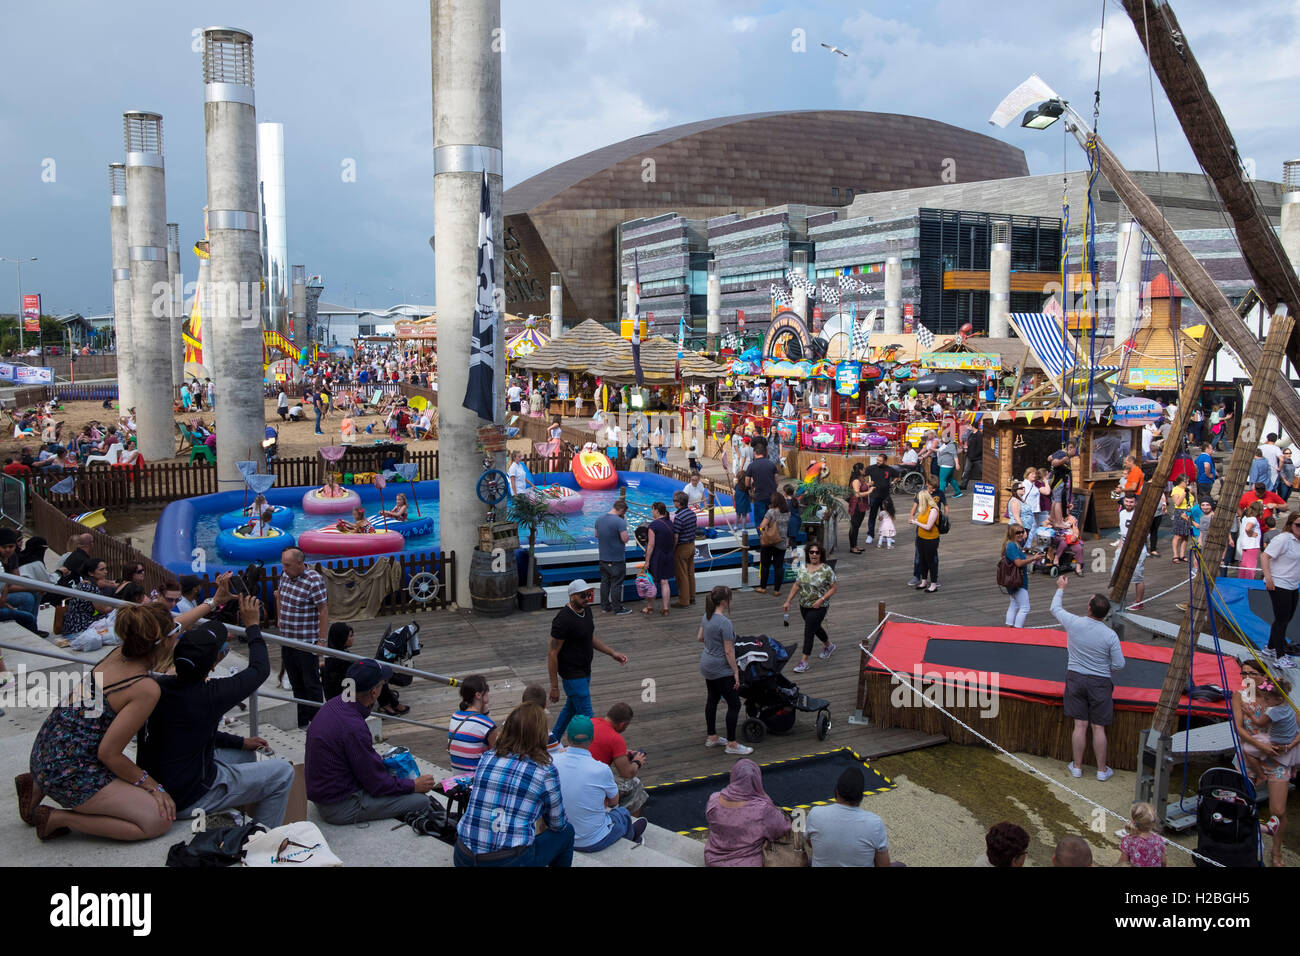 Fun fair at Roald Dahl Plass, Cardiff Bay, Cardiff, Wales Stock Photo -  Alamy